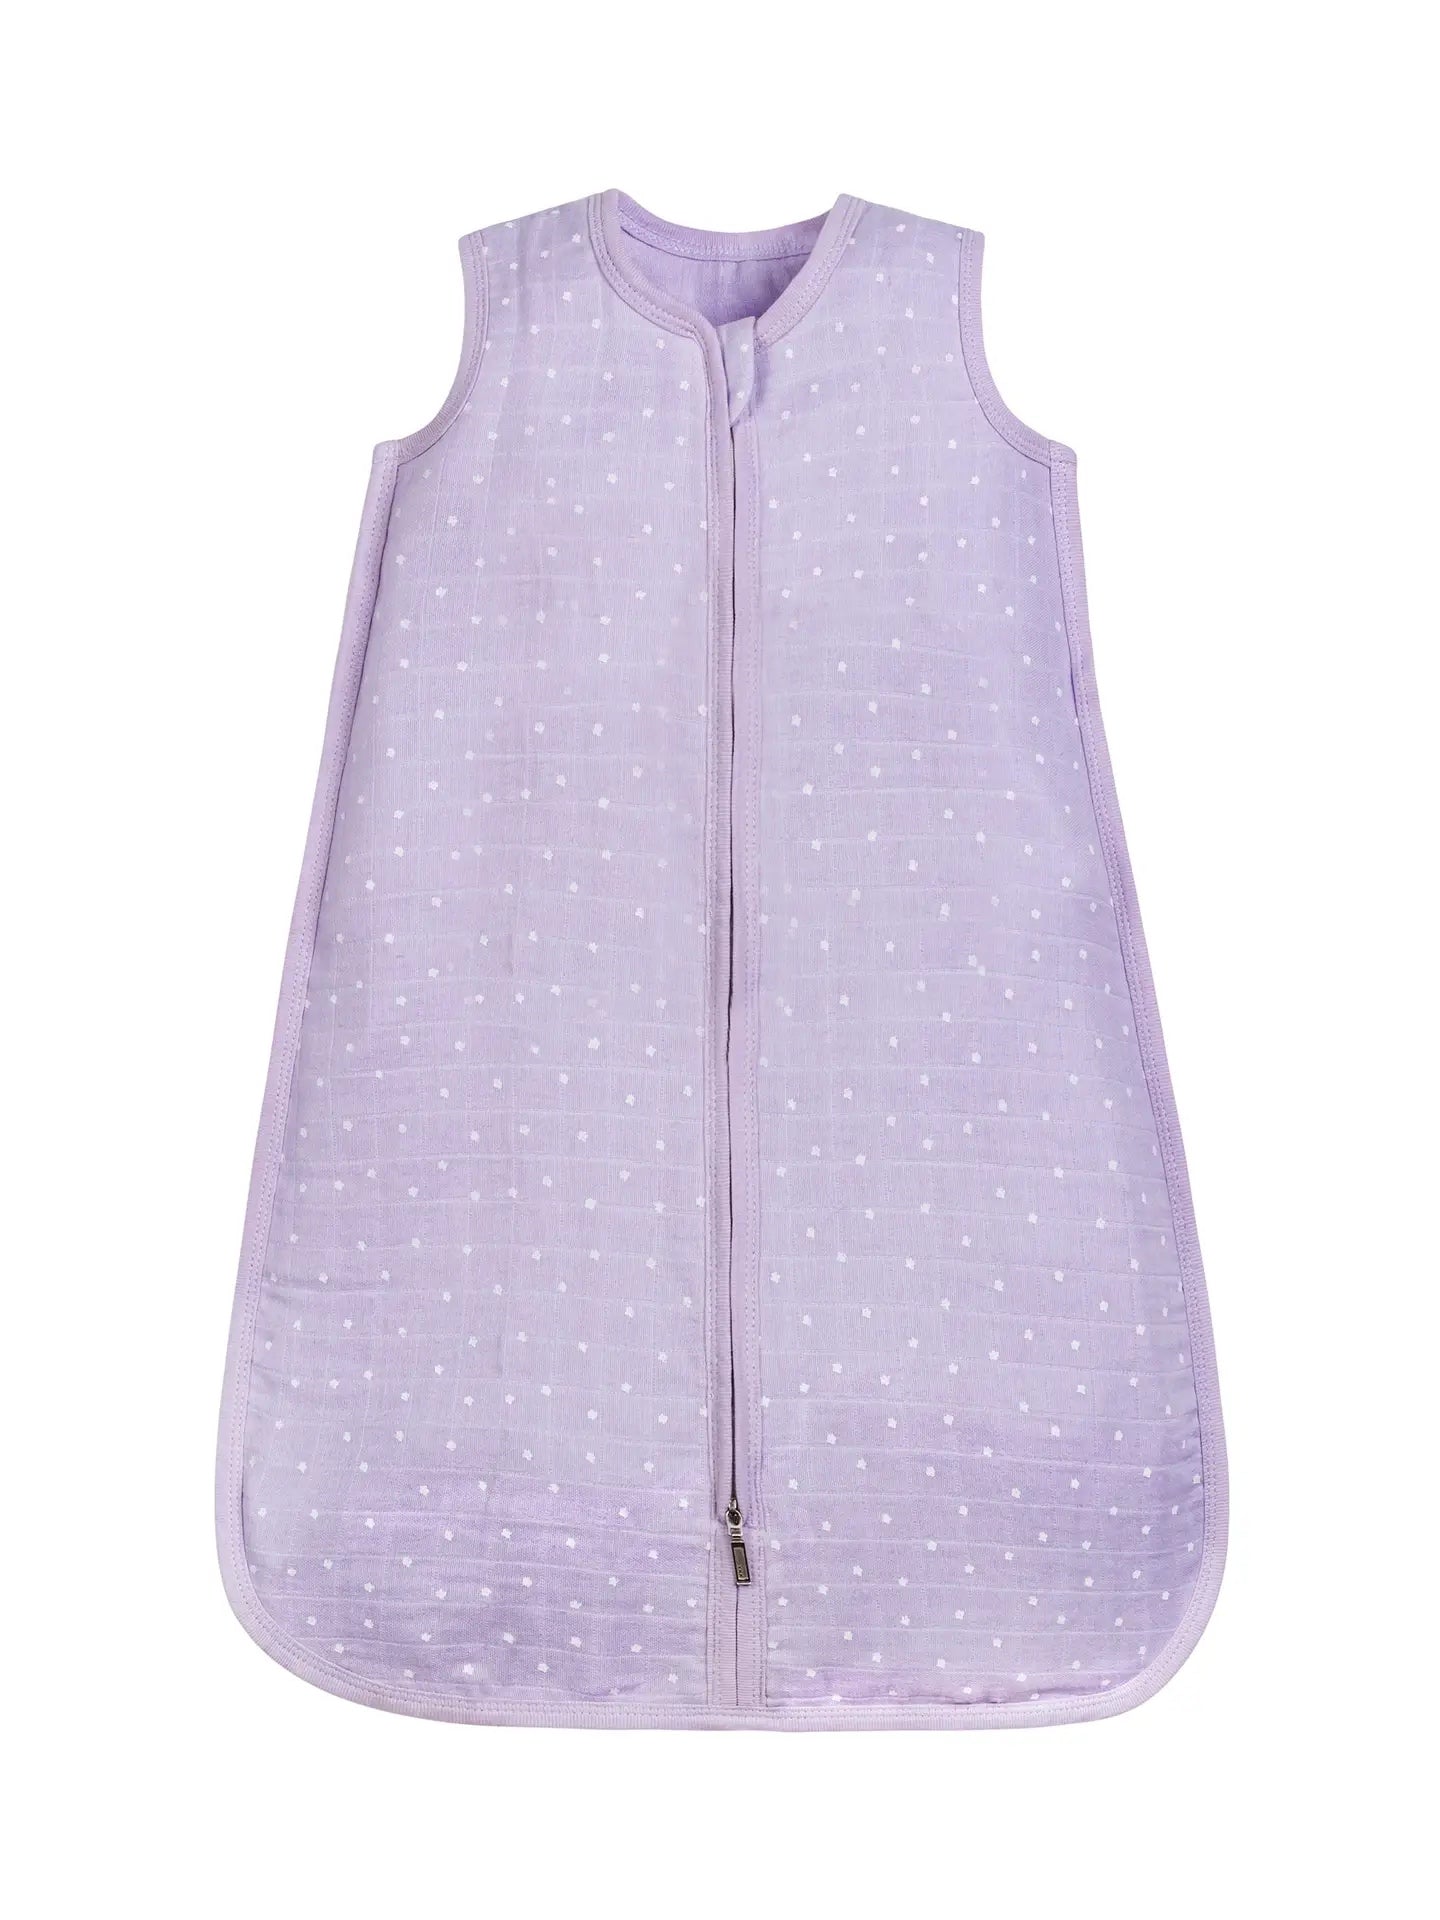 organic muslin sleep sack in lavender stars